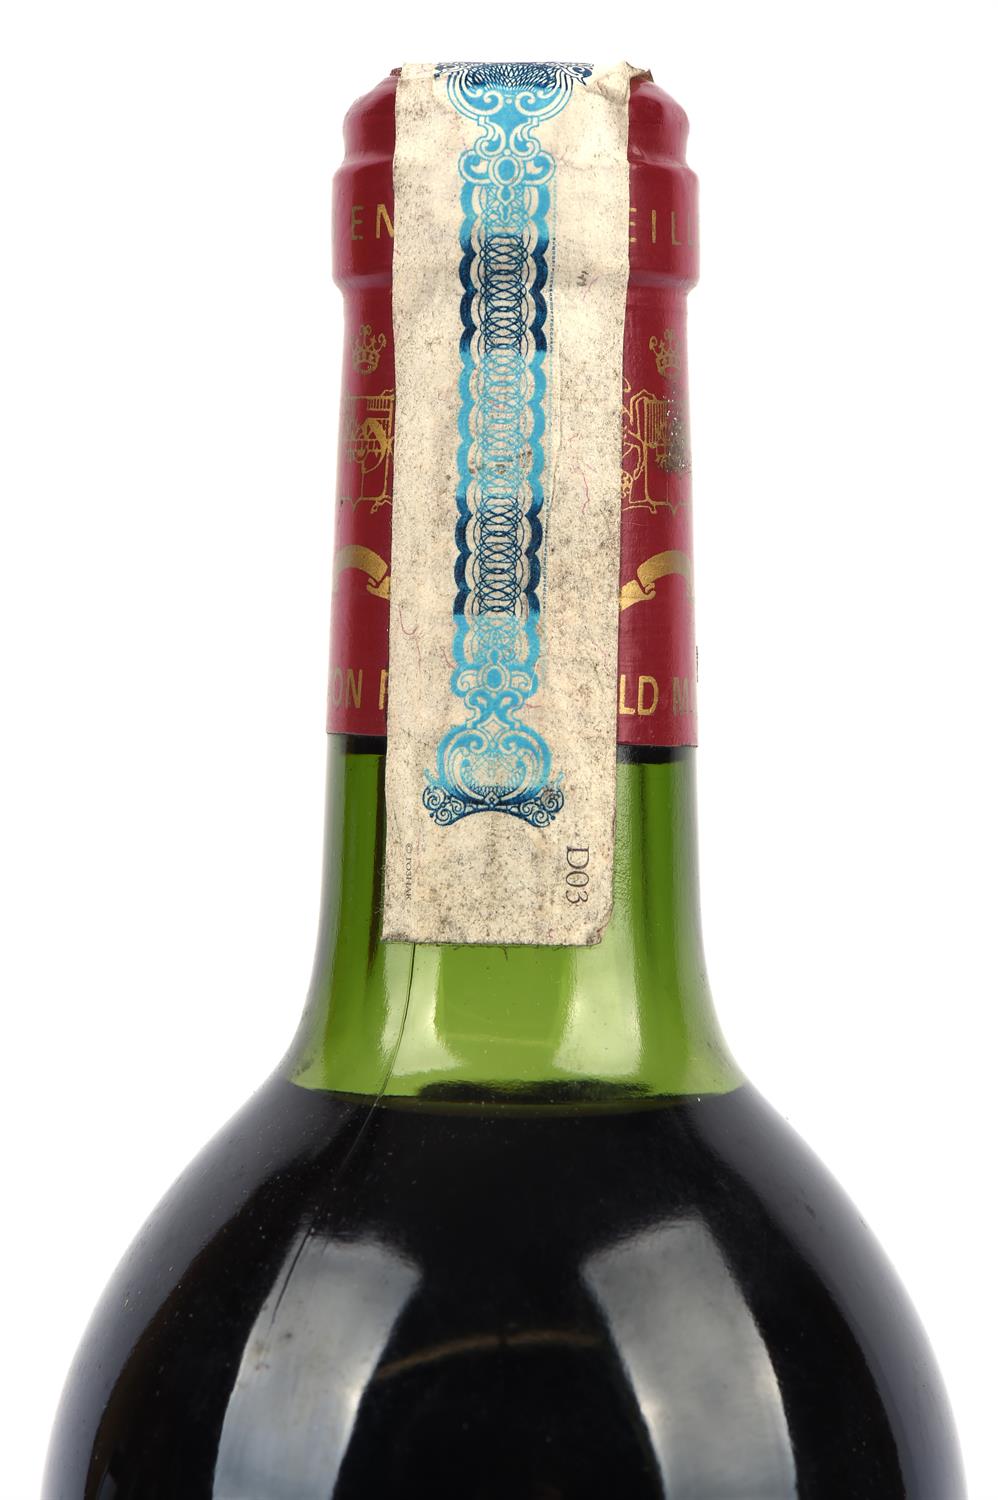 Bordeaux wine, Chateau Mouton Rothschild 1982, label design by John Huston, one bottle, - Image 4 of 4